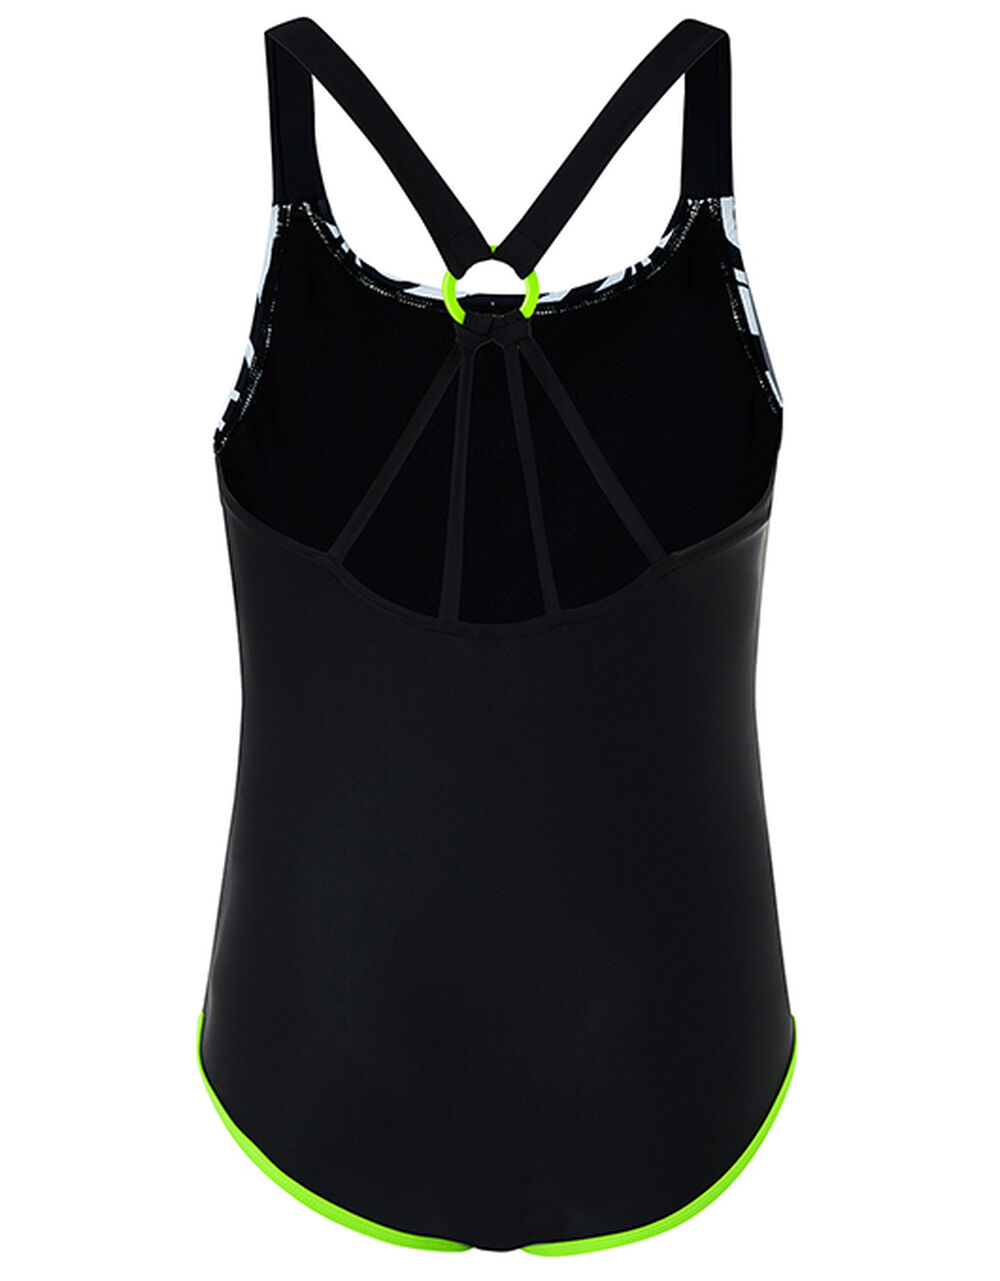 Zara Zebra Swimsuit Black | Girls' Beach & Swimwear | Monsoon UK.